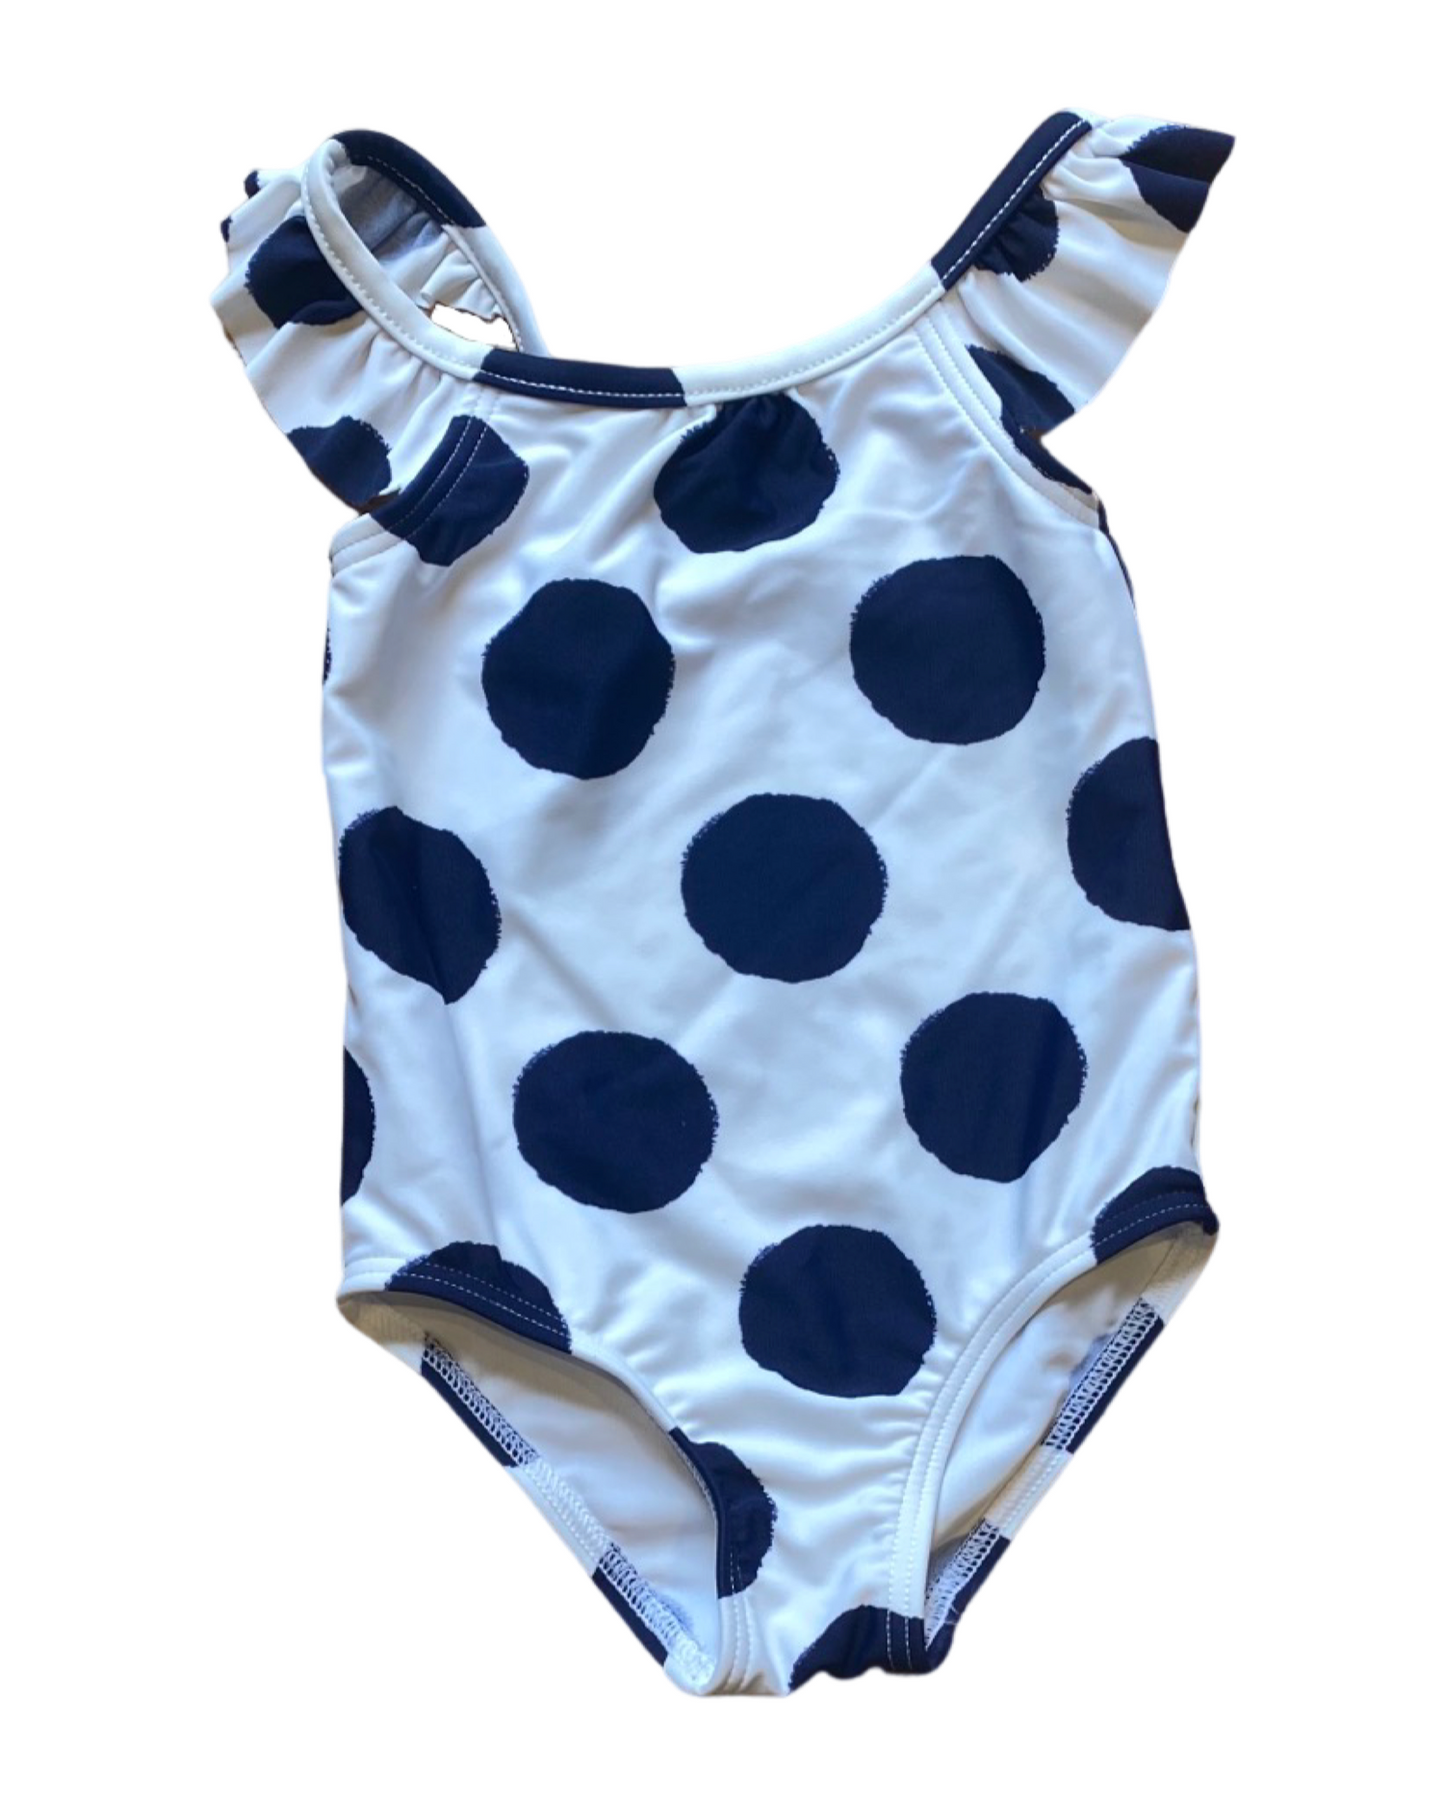 M&S dotty swimsuit (size 6-9mths)